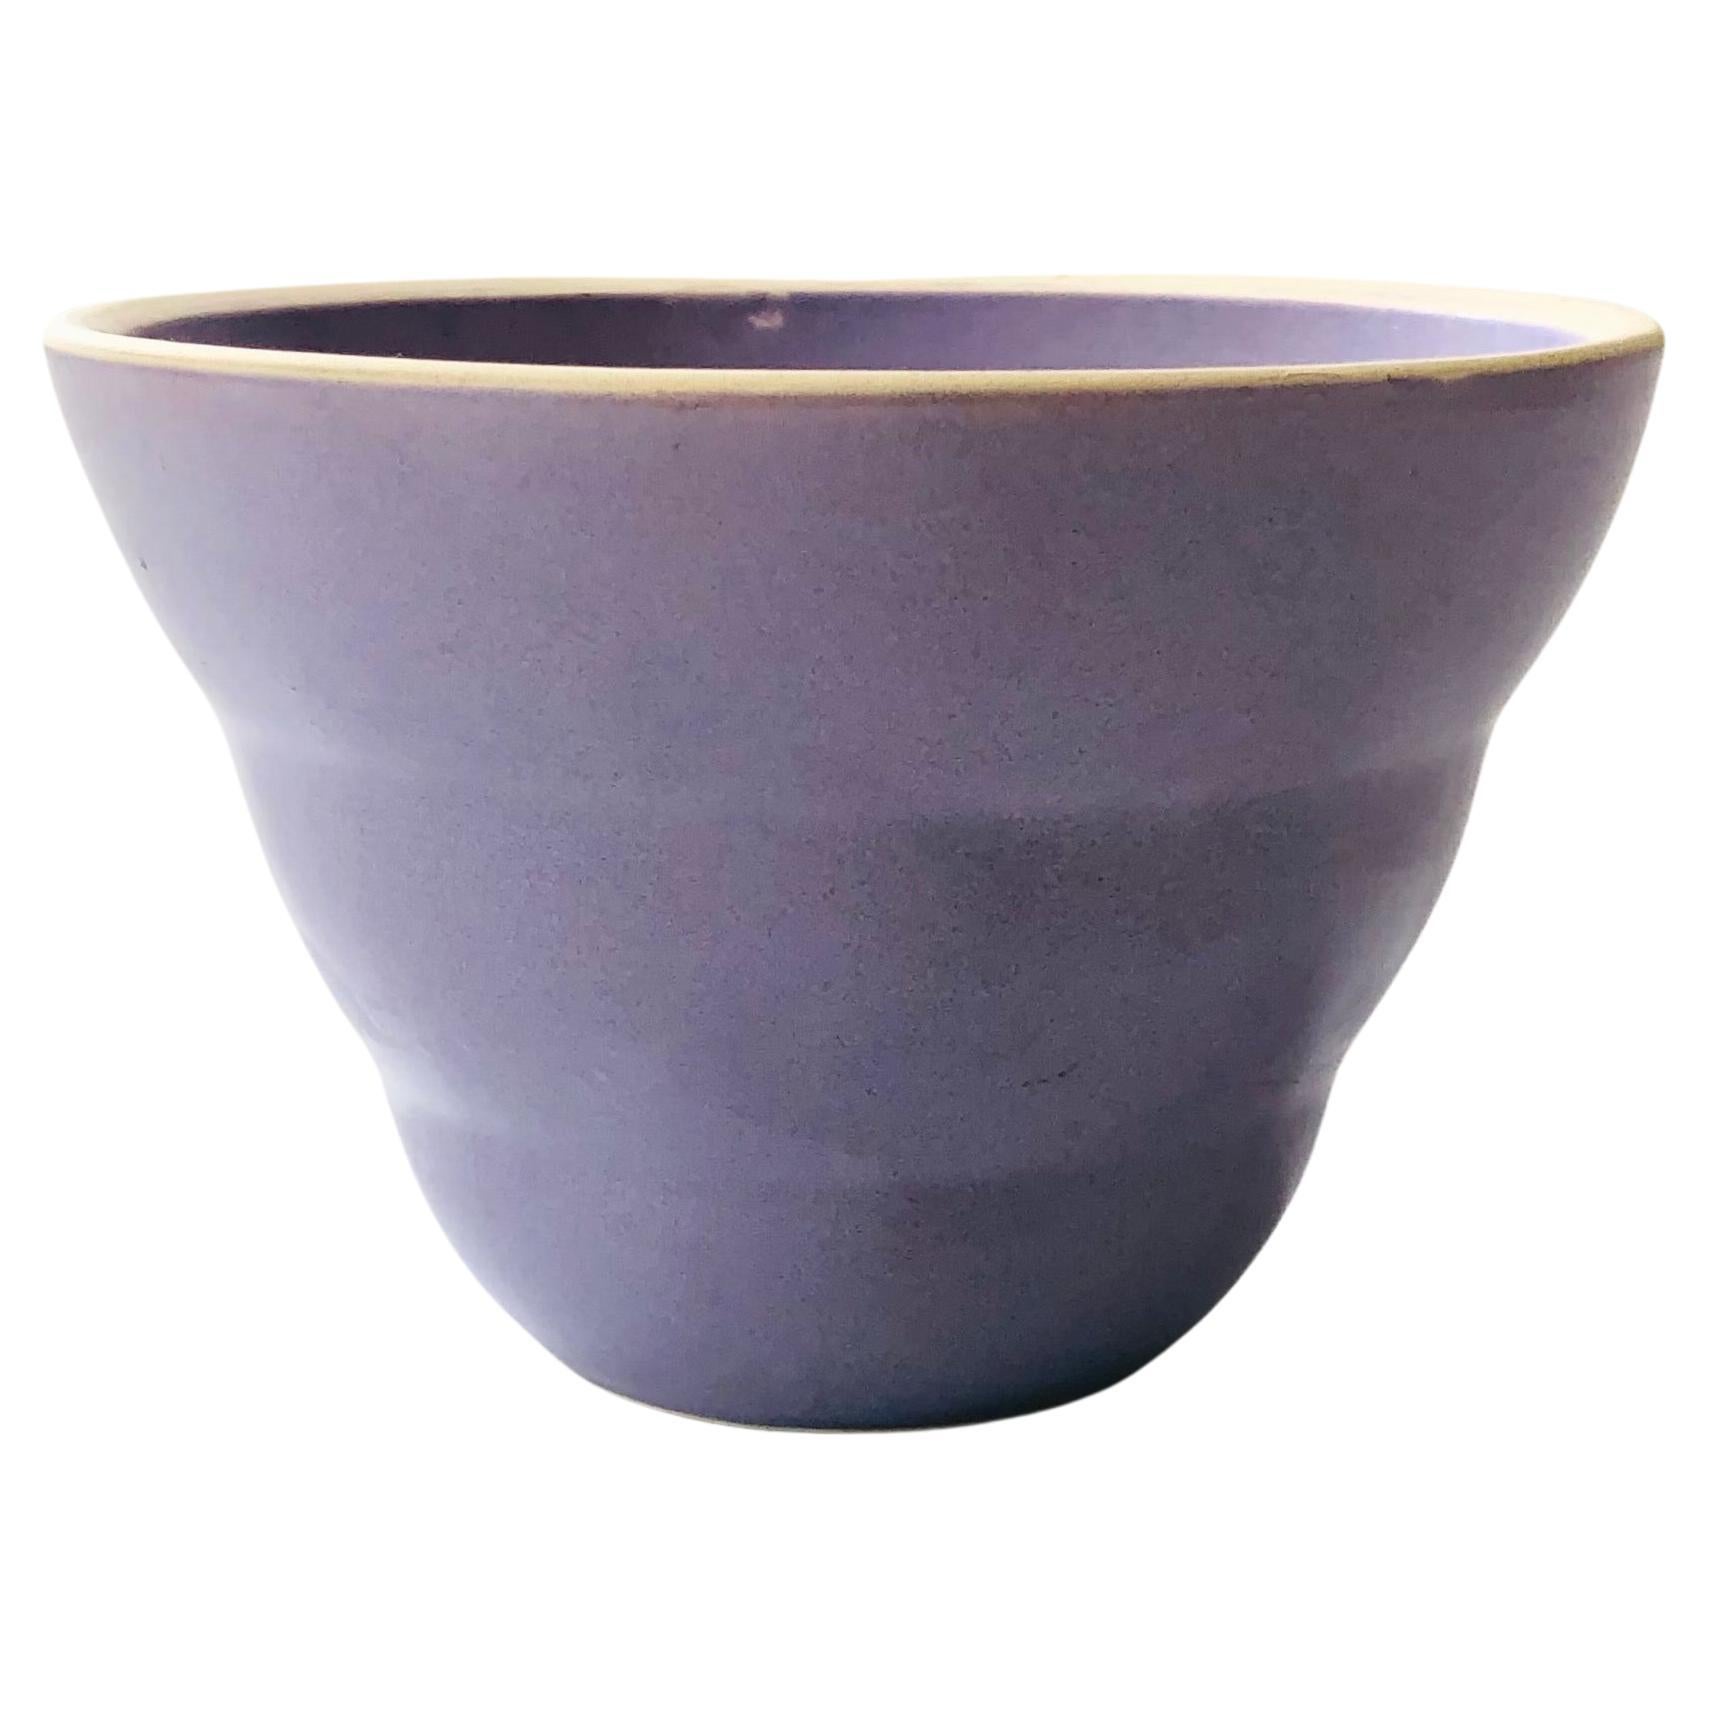 Pflanzgefäß aus gerippter lila Keramik von Mud Hut